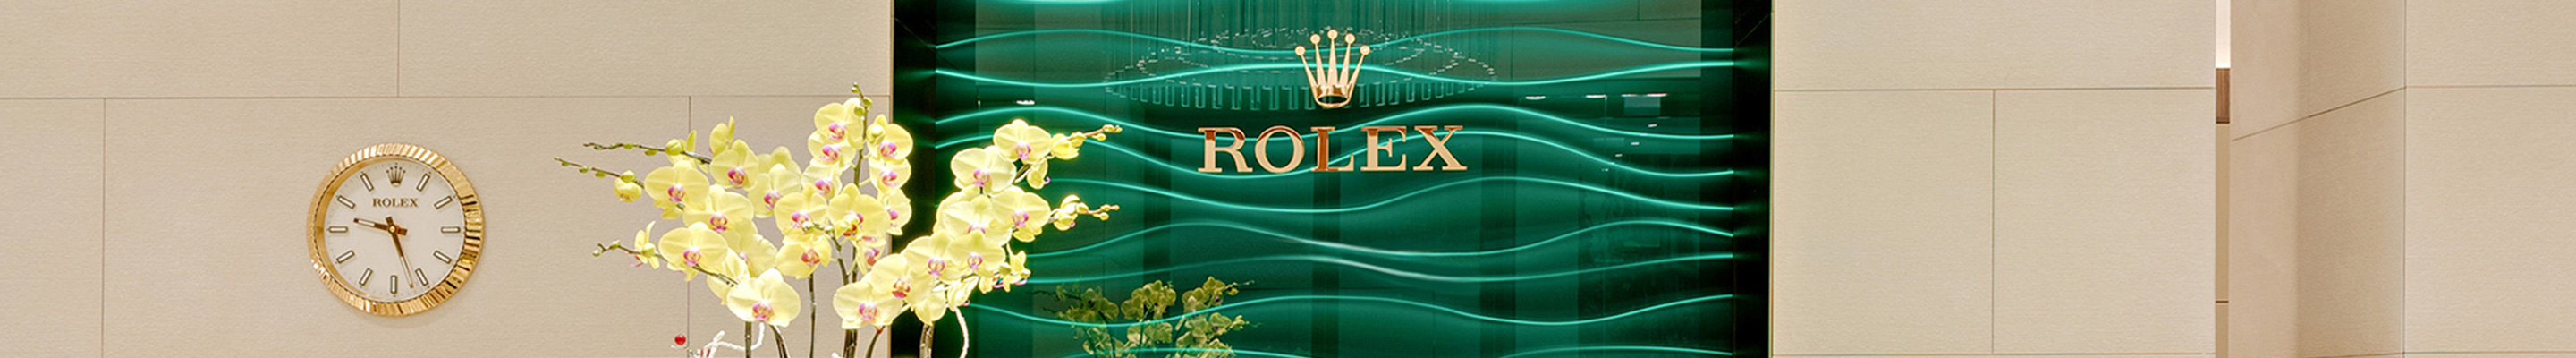 Rolex - Kontakt zu Hunke Uhren